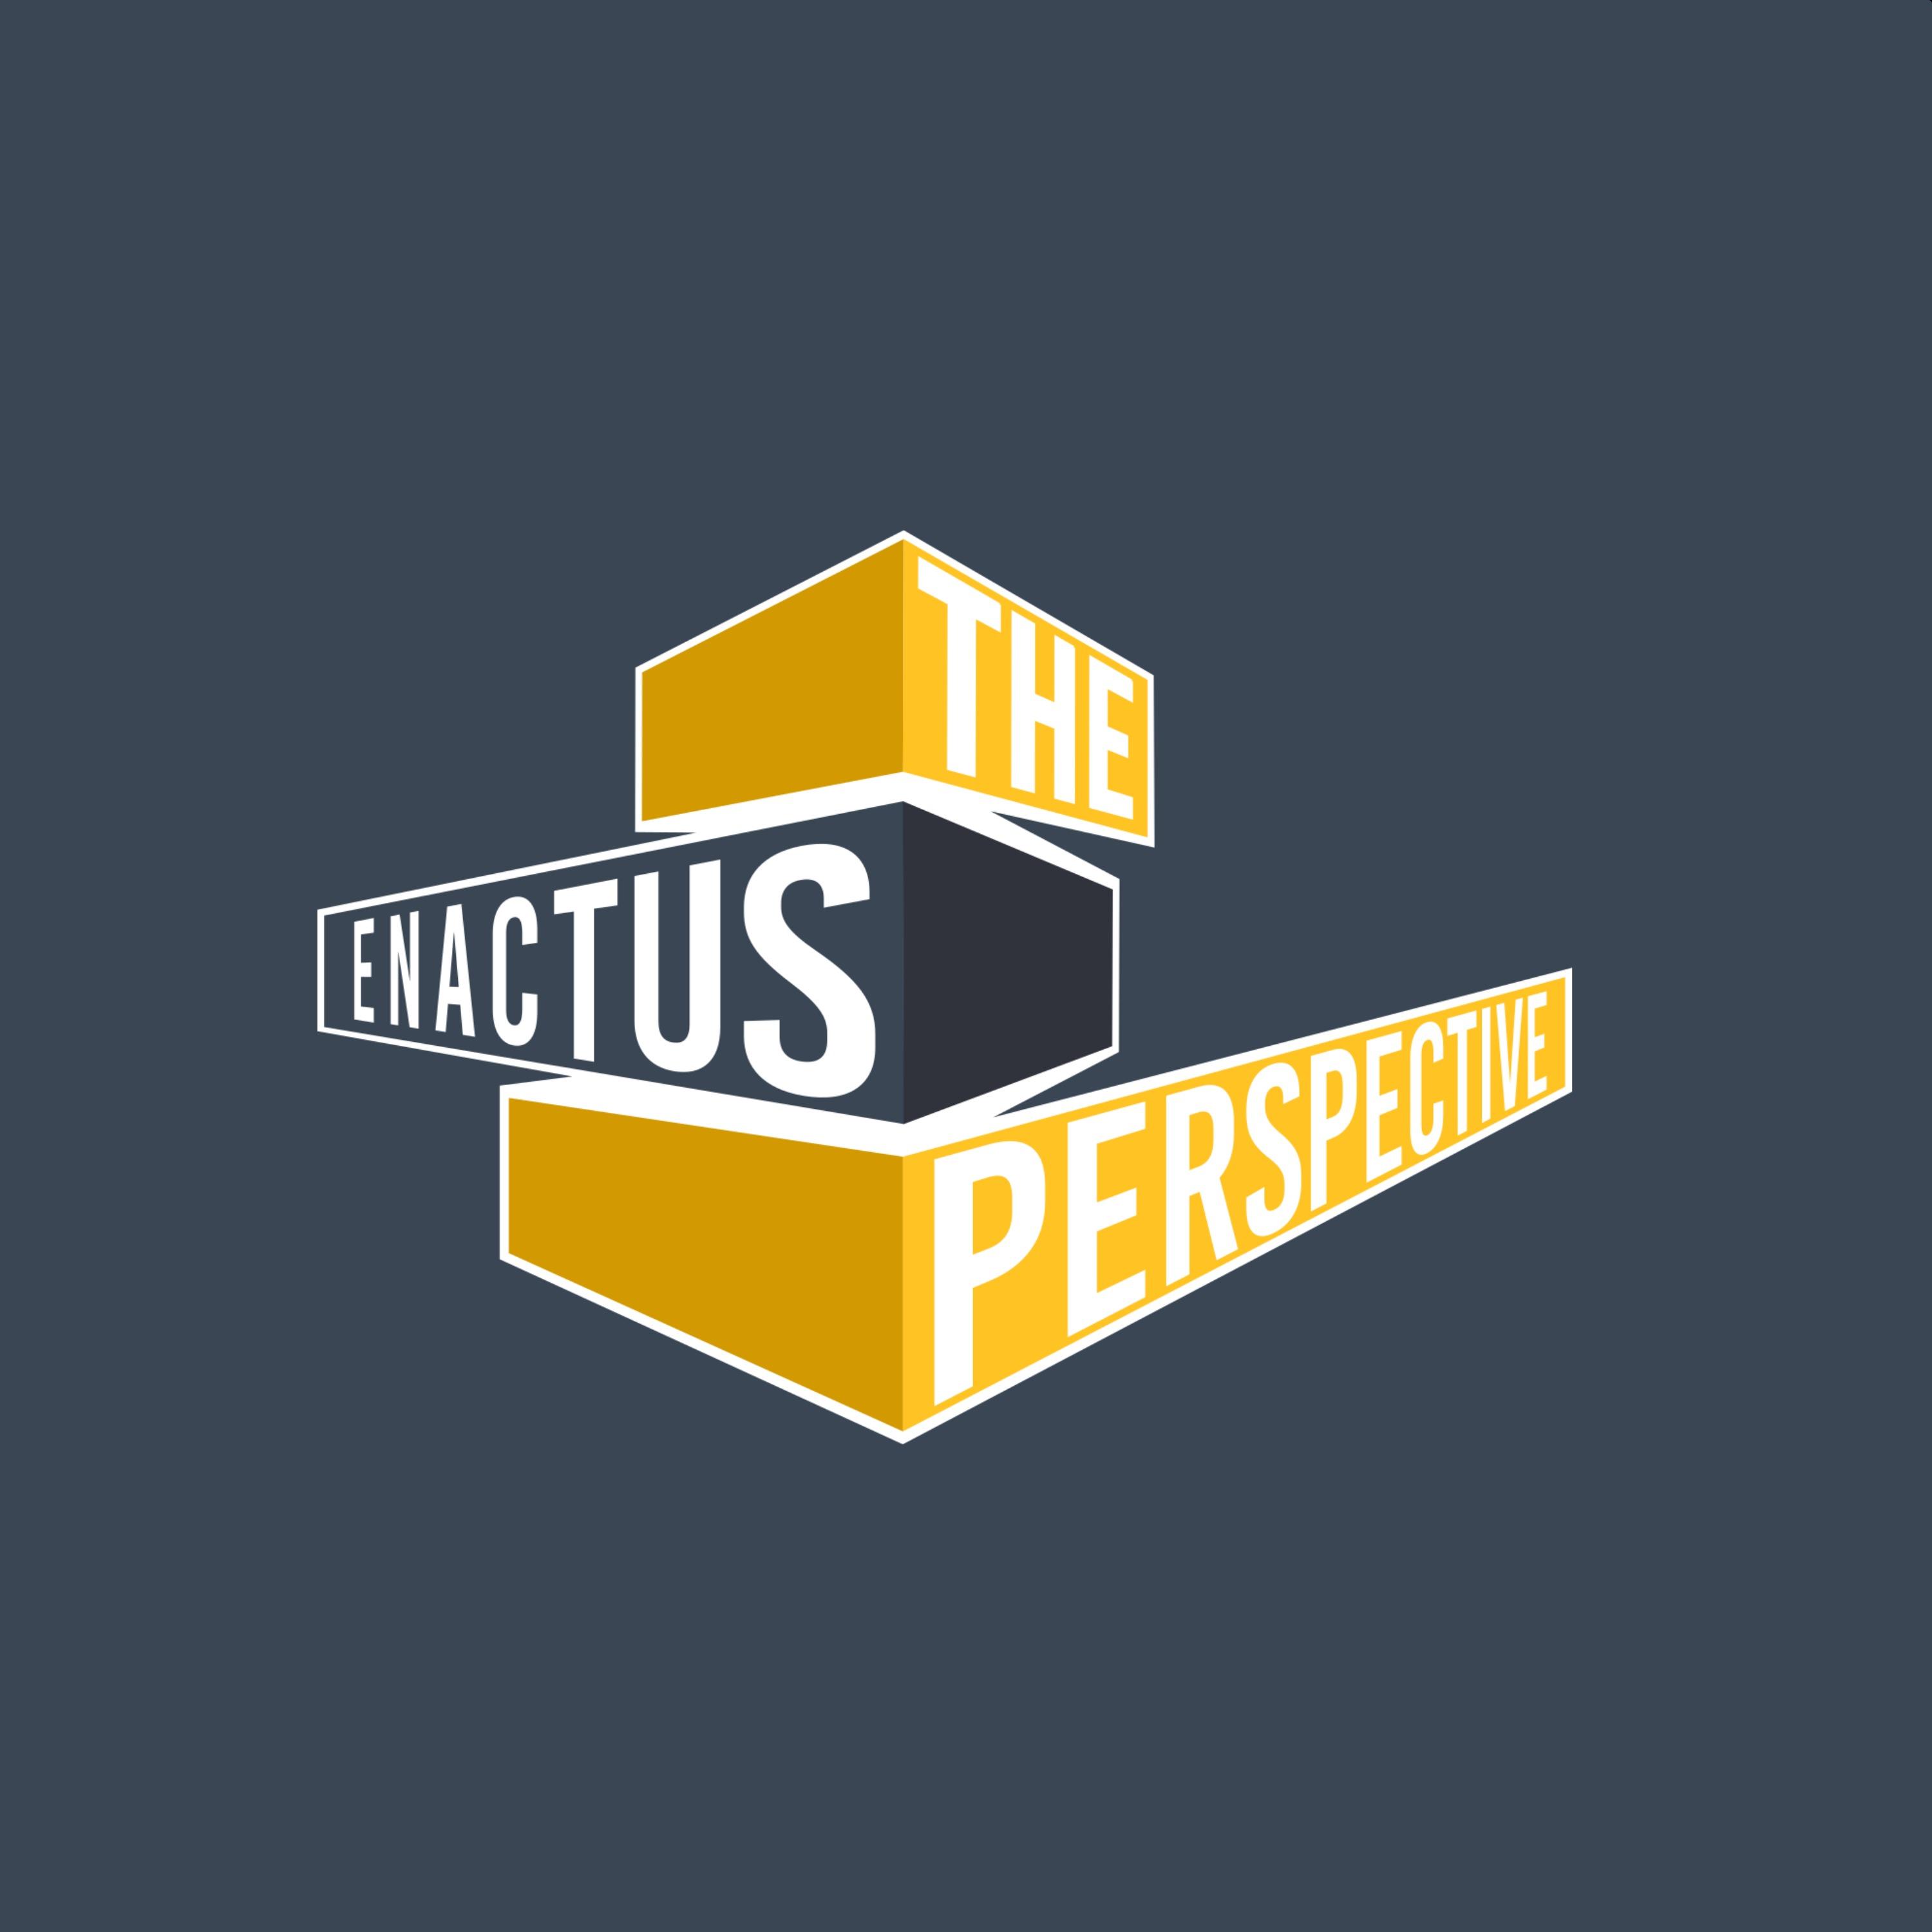 The Enactus Perspective